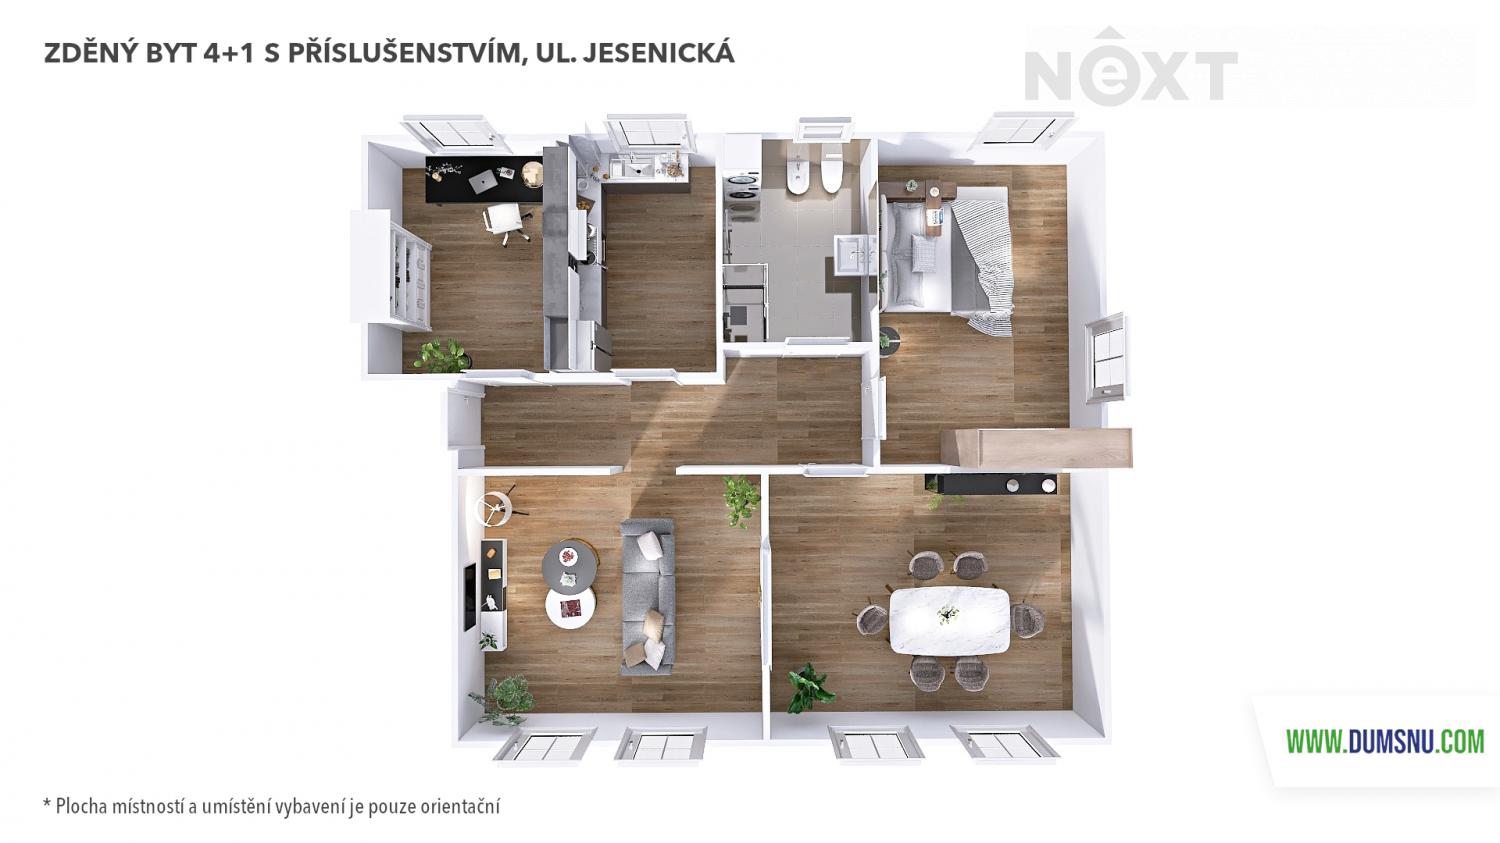 Prodej byt 4+1, 90㎡|Olomoucký kraj, Šumperk, Jesenická 1520/51, 78701